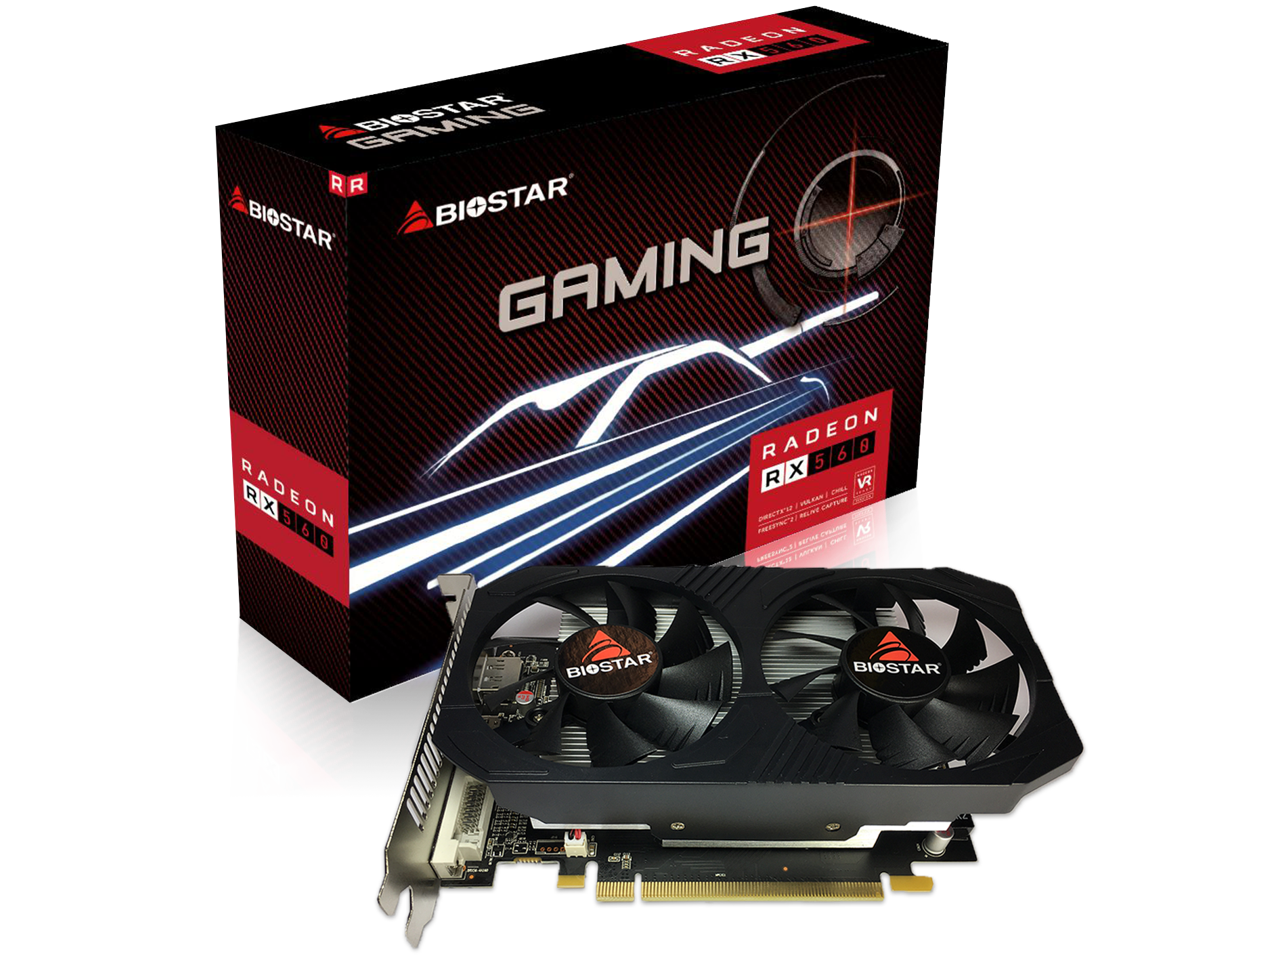 Biostar OC Gaming Radeon RX 560 4GB 